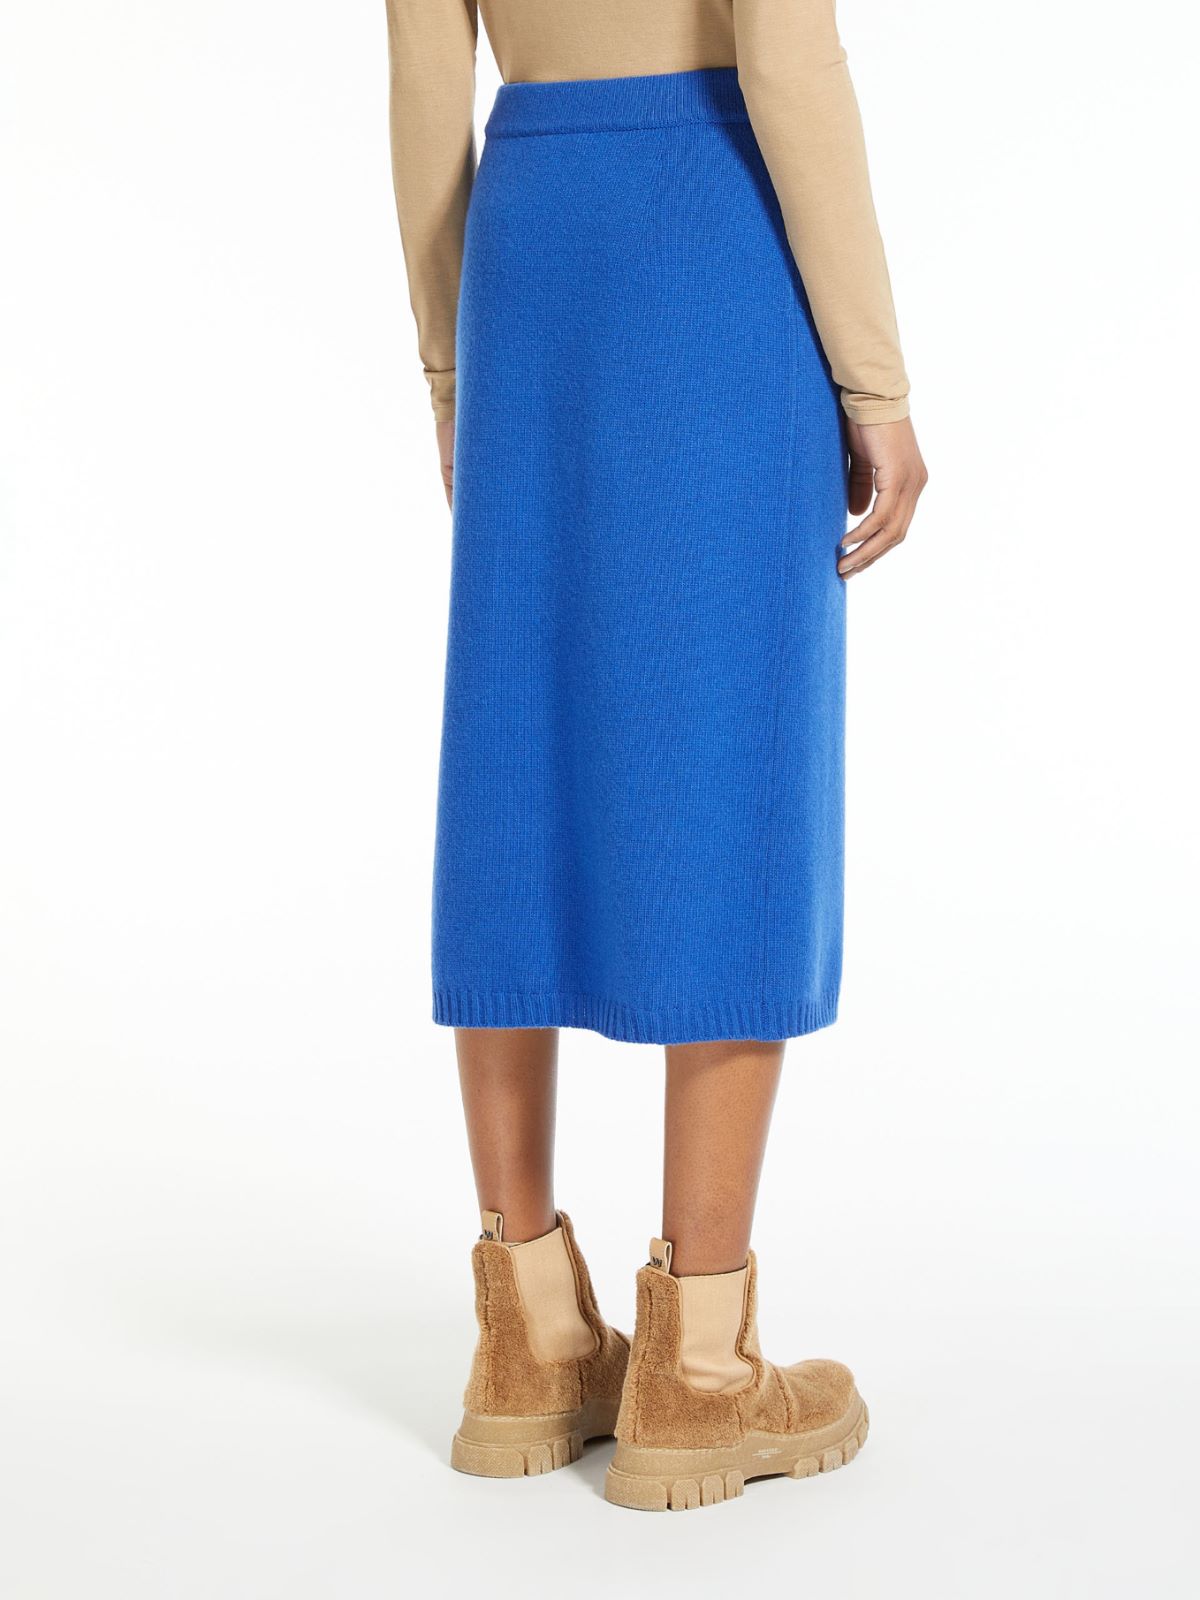 Wool yarn skirt - CORNFLOWER BLUE - Weekend Max Mara - 3